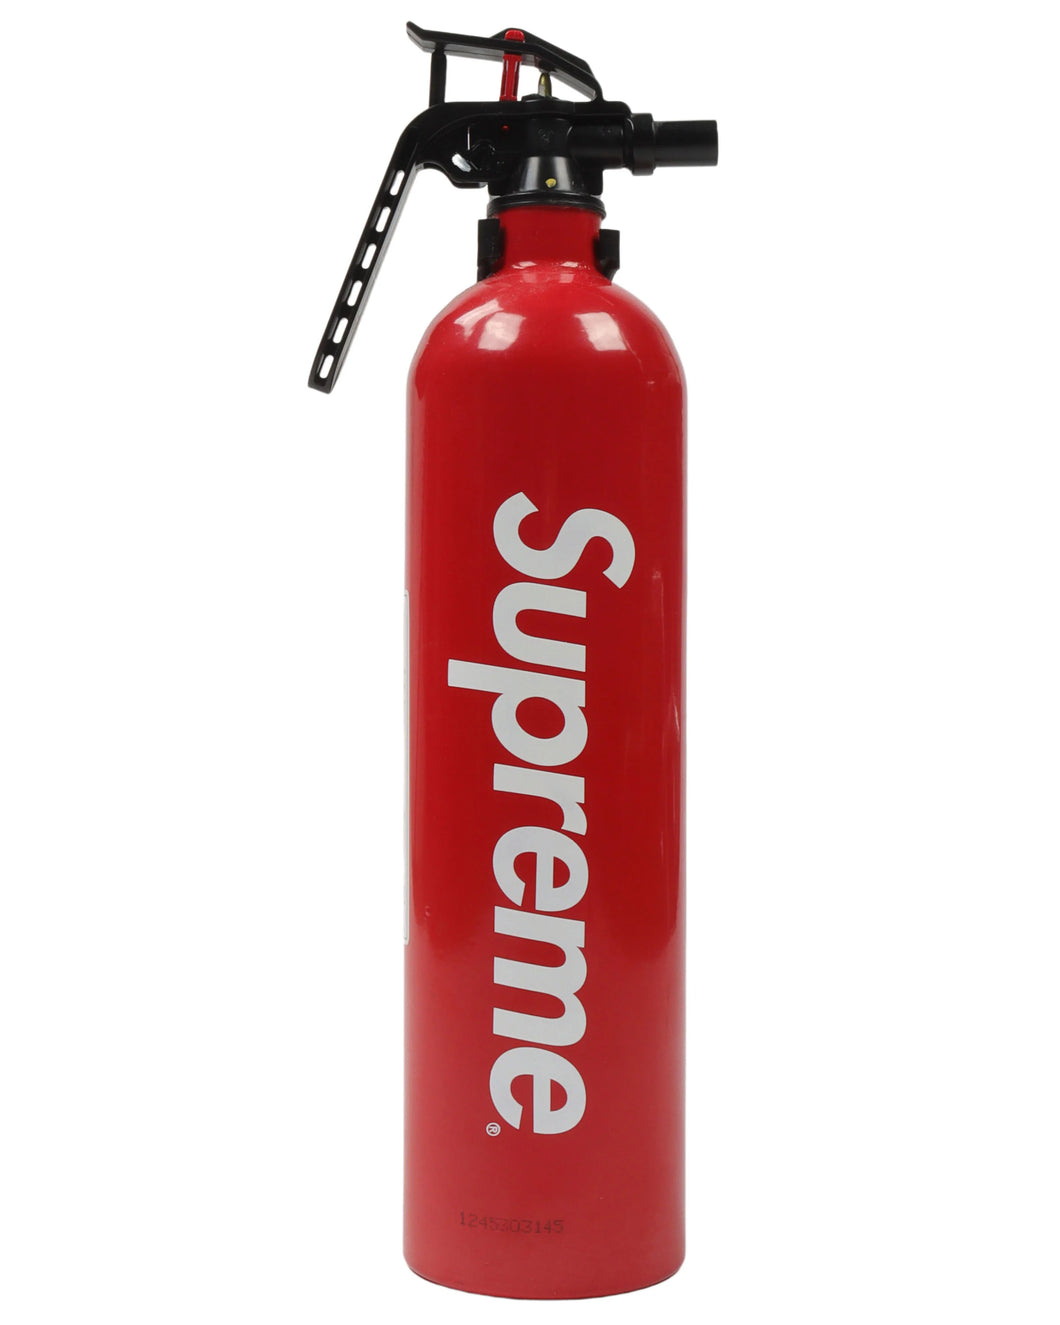 Supreme x Kidde Fire Extinguisher